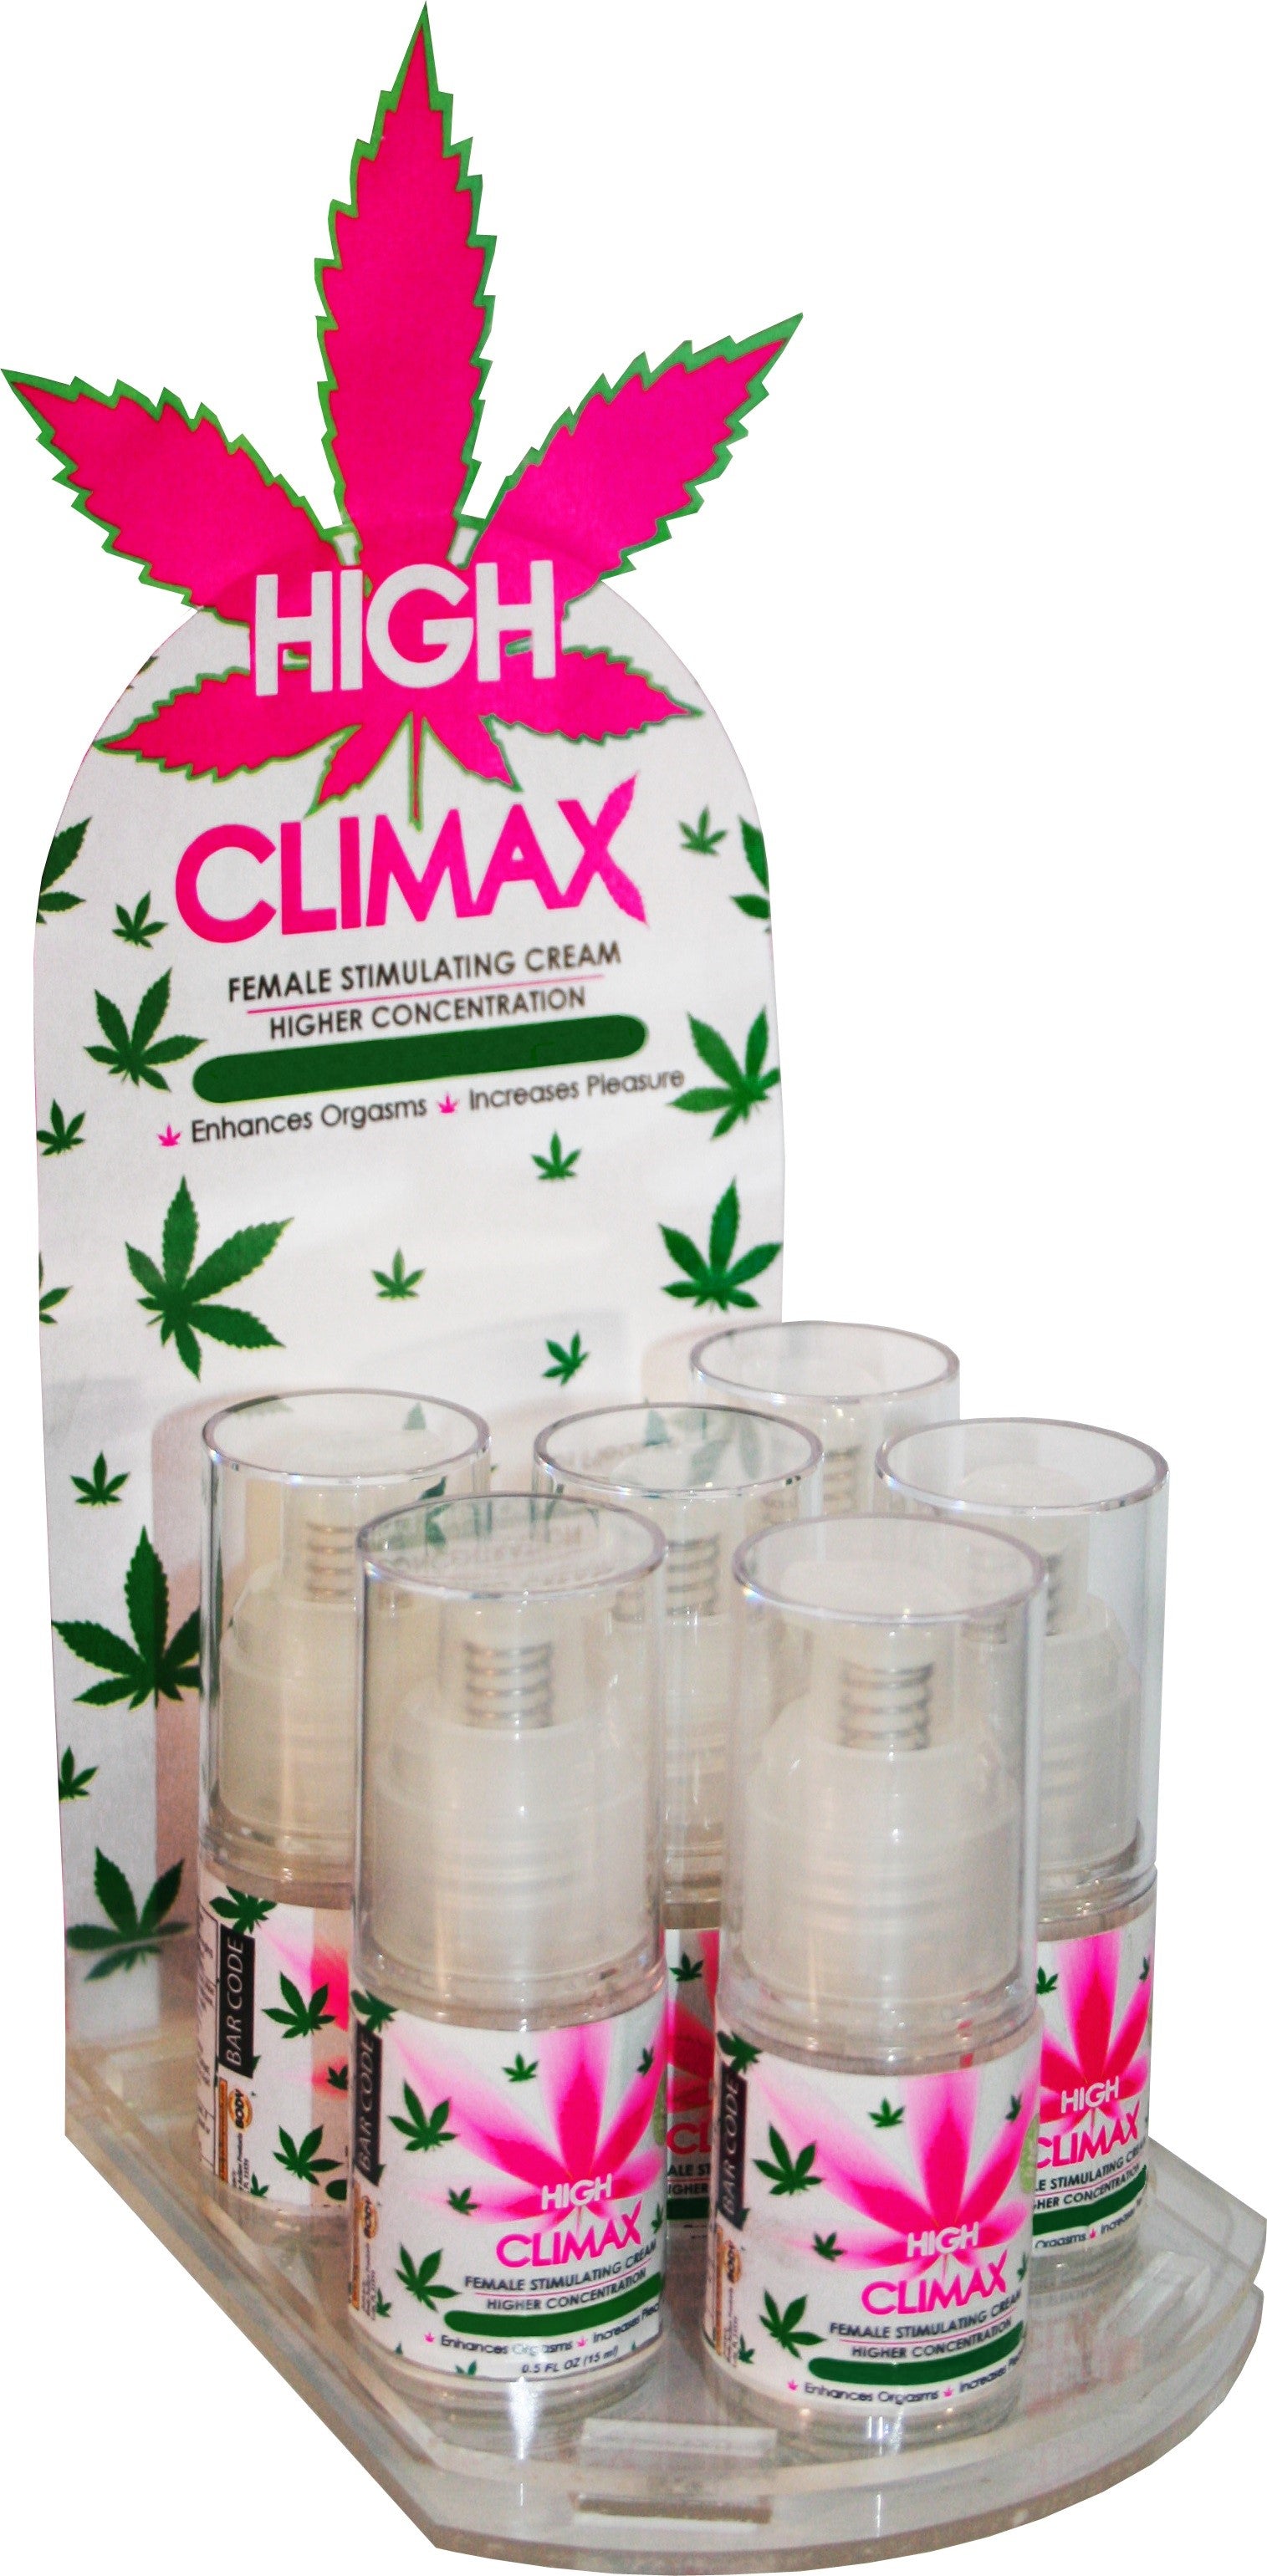 High Climax Female Stimulating Cream - 0.5 Fl. Oz. / 15 ml - 6 Count Display-0